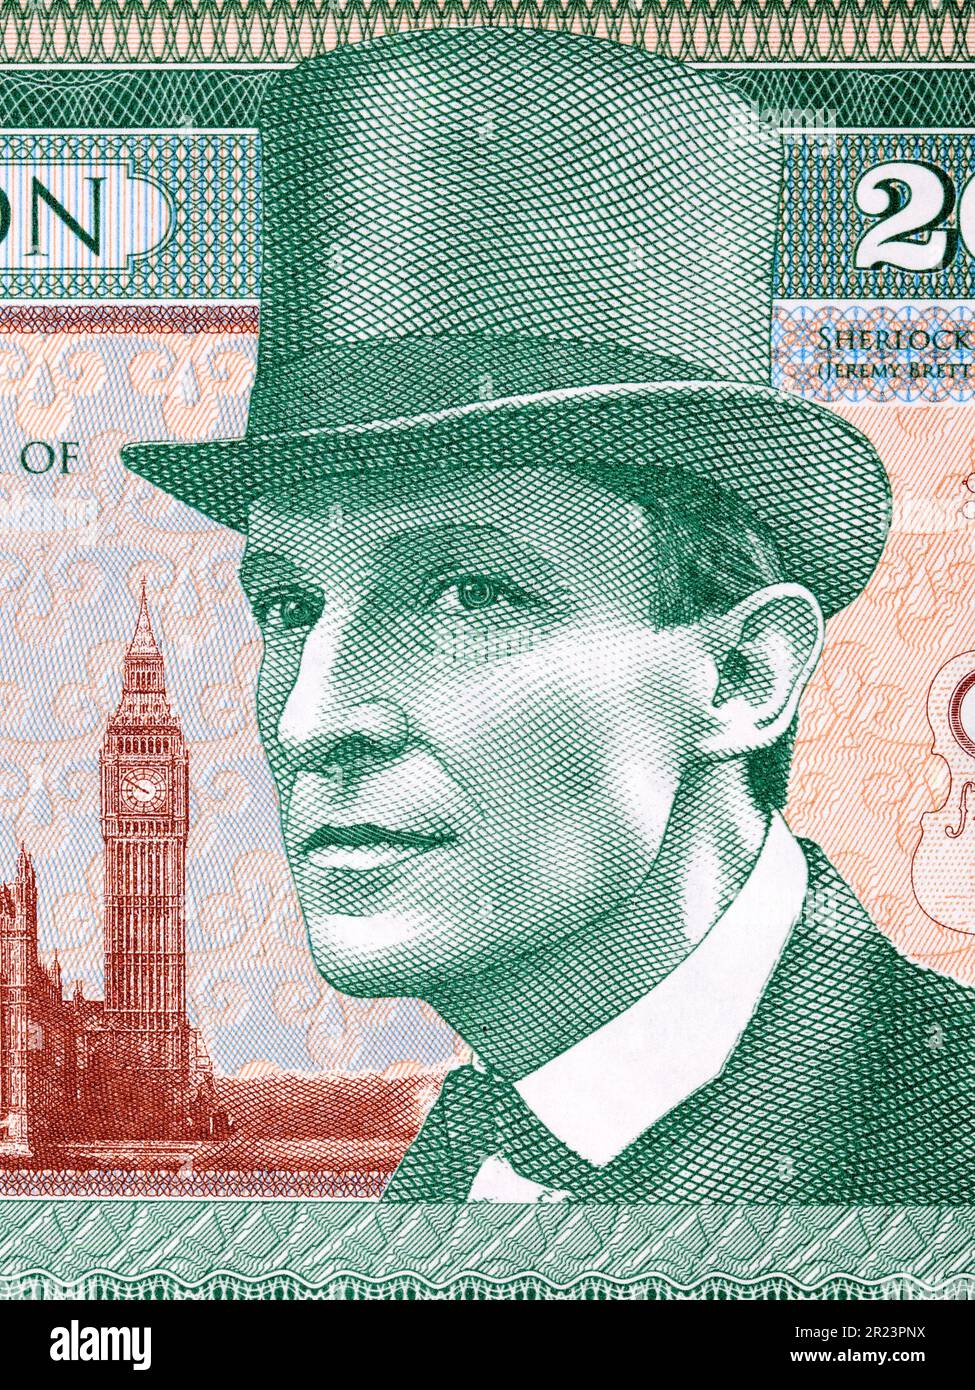 Sherlock Holmes a portrait from English money - pounds Stock Photo